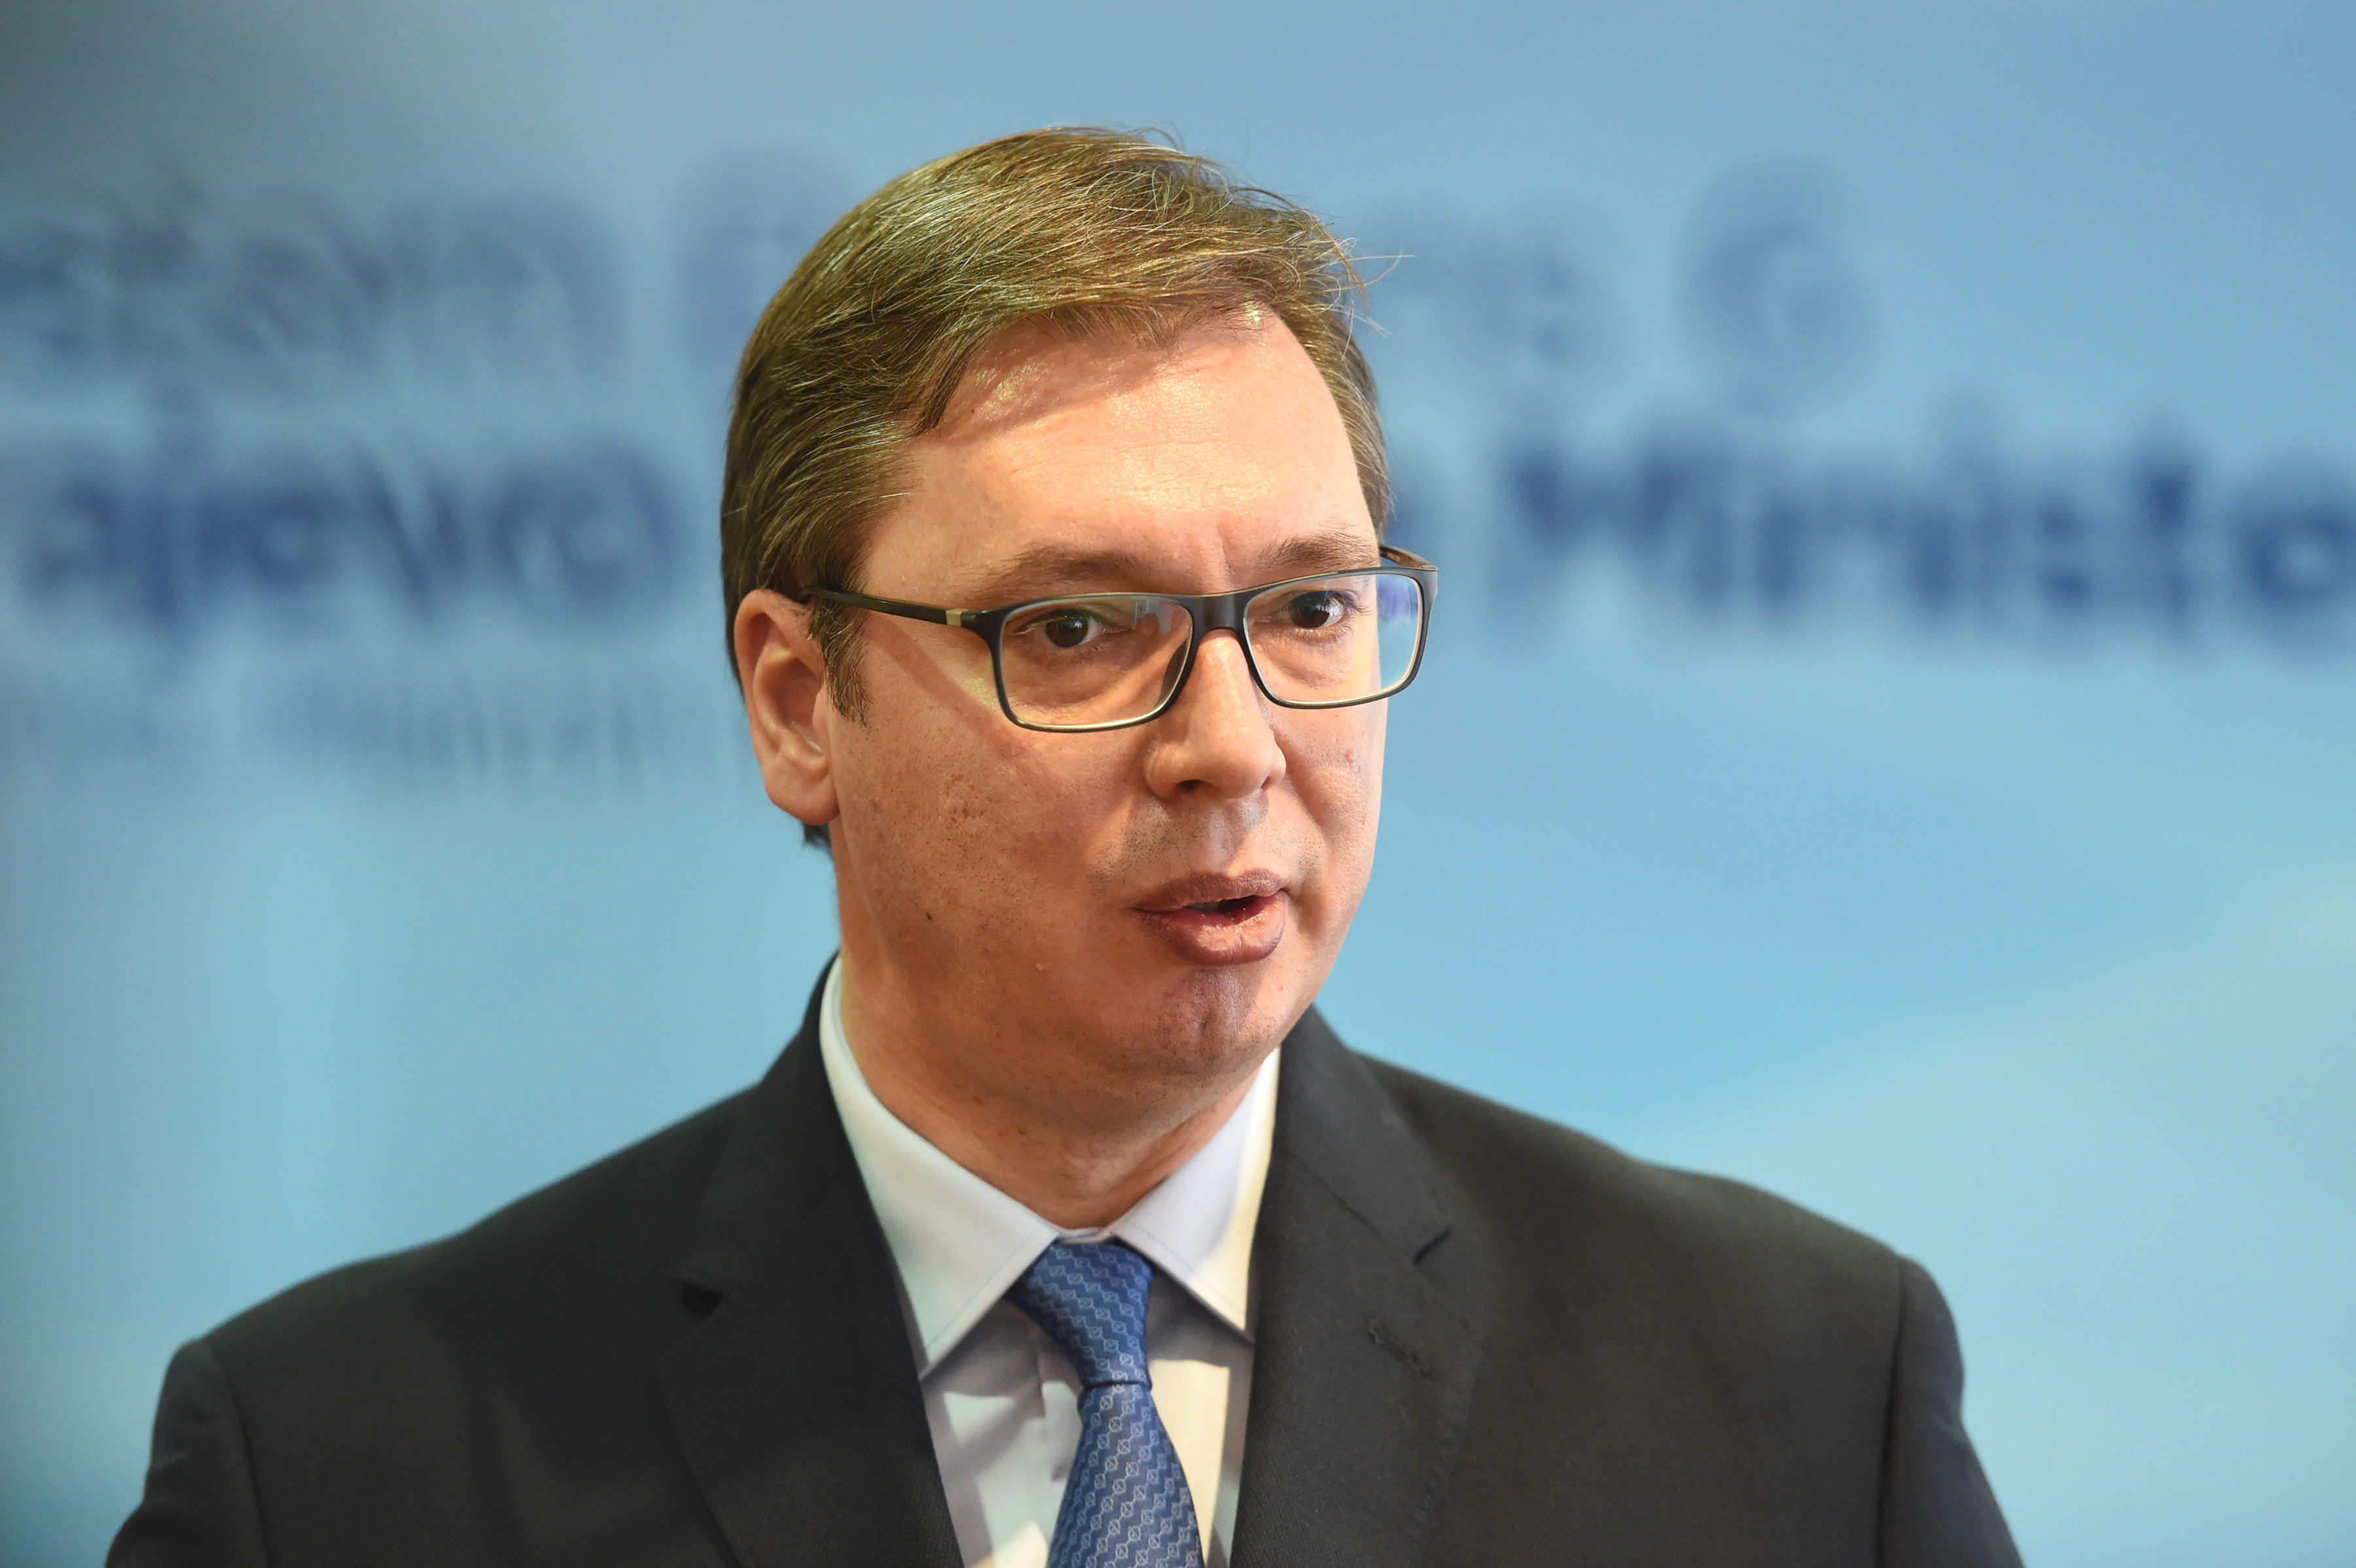 Vučić: Why we need internal dialogue on Kosovo - European Western Balkans